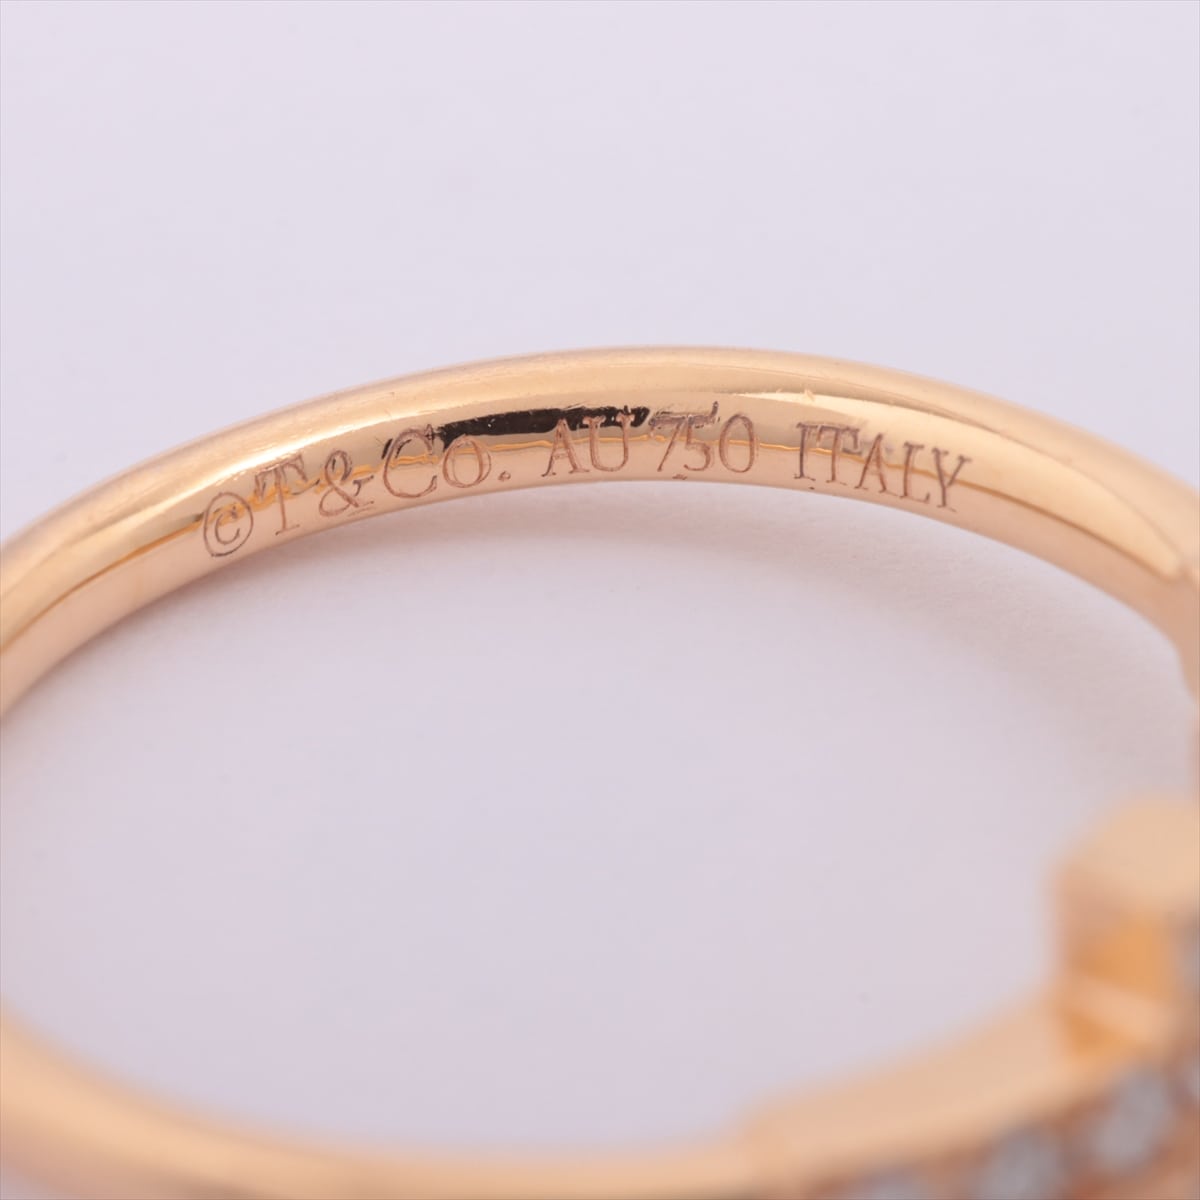 Tiffany T Wire diamond rings 750(PG) 2.3g